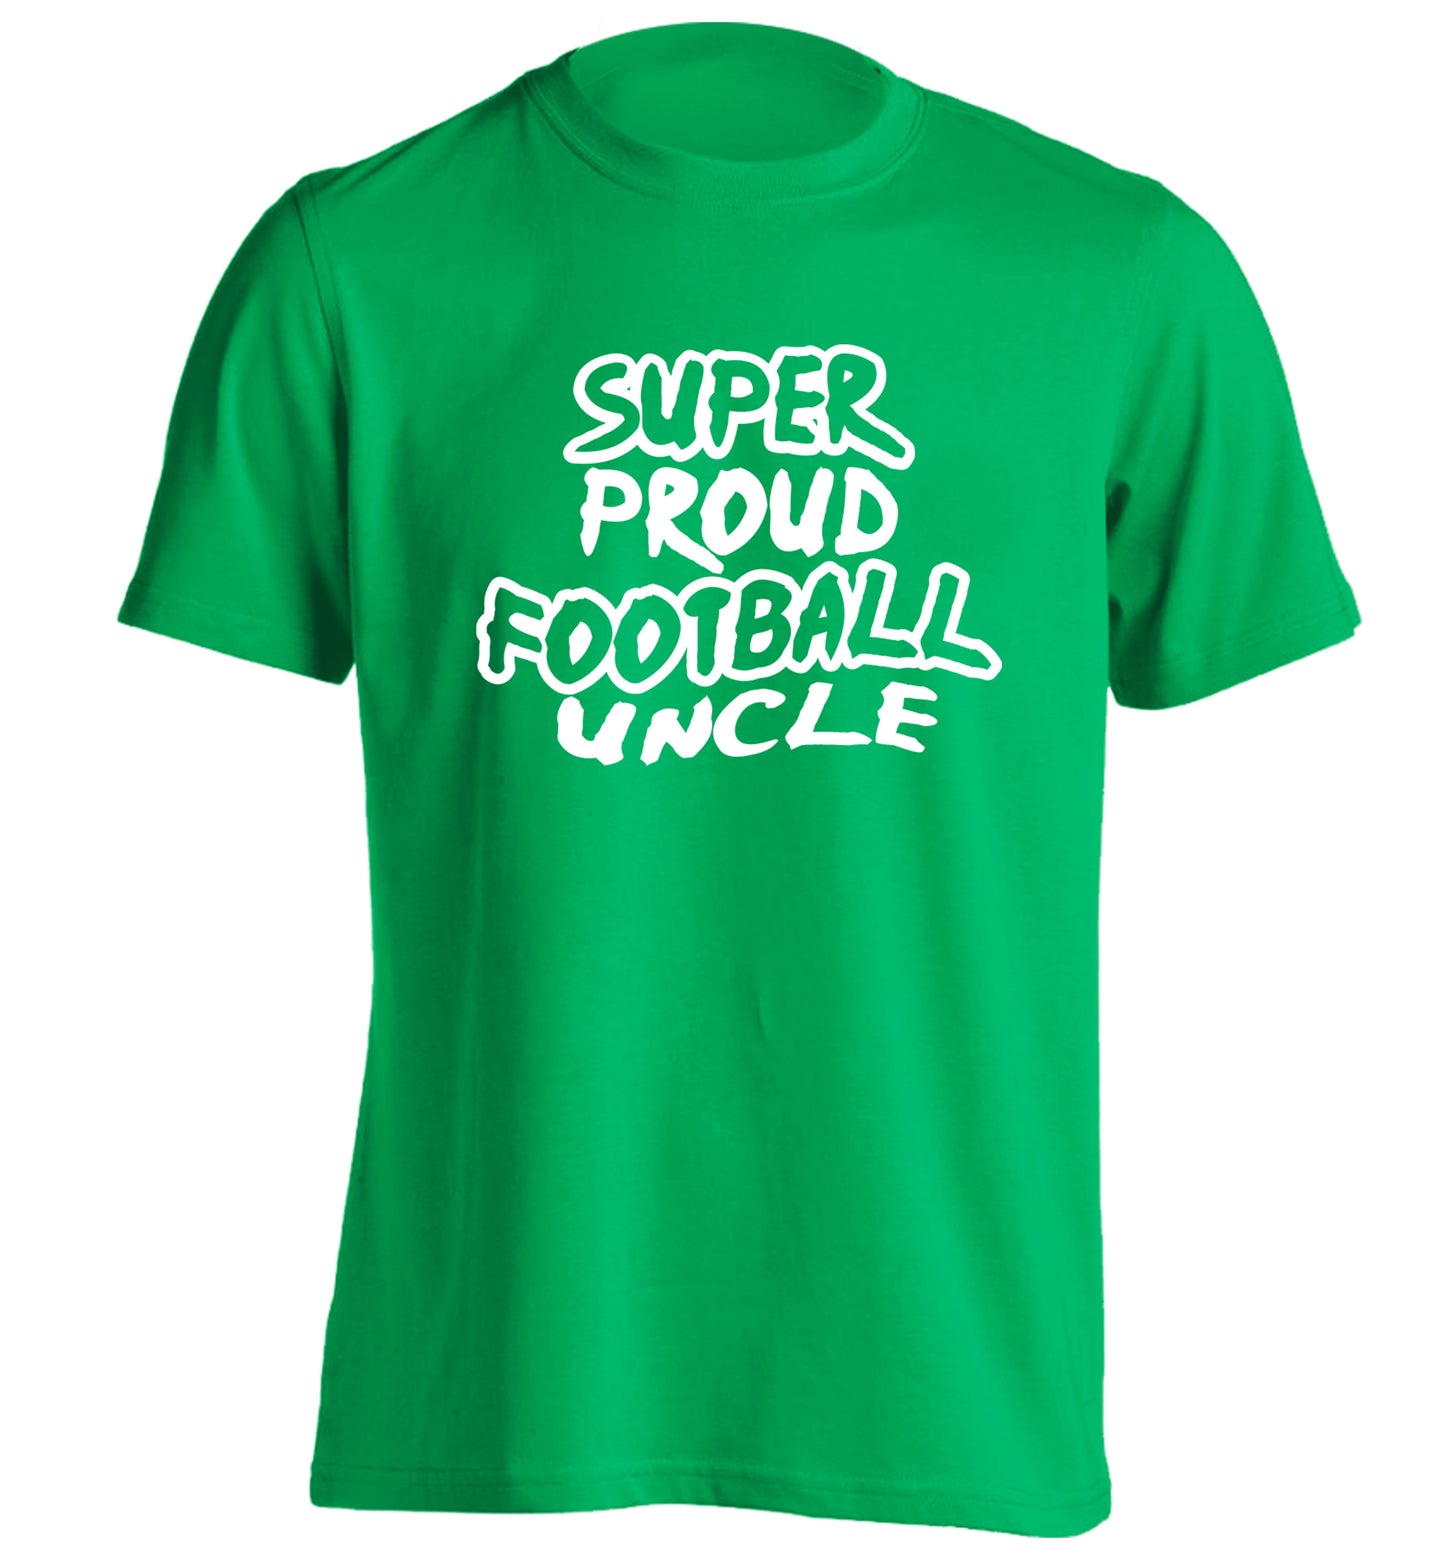 Super proud football uncle adults unisexgreen Tshirt 2XL